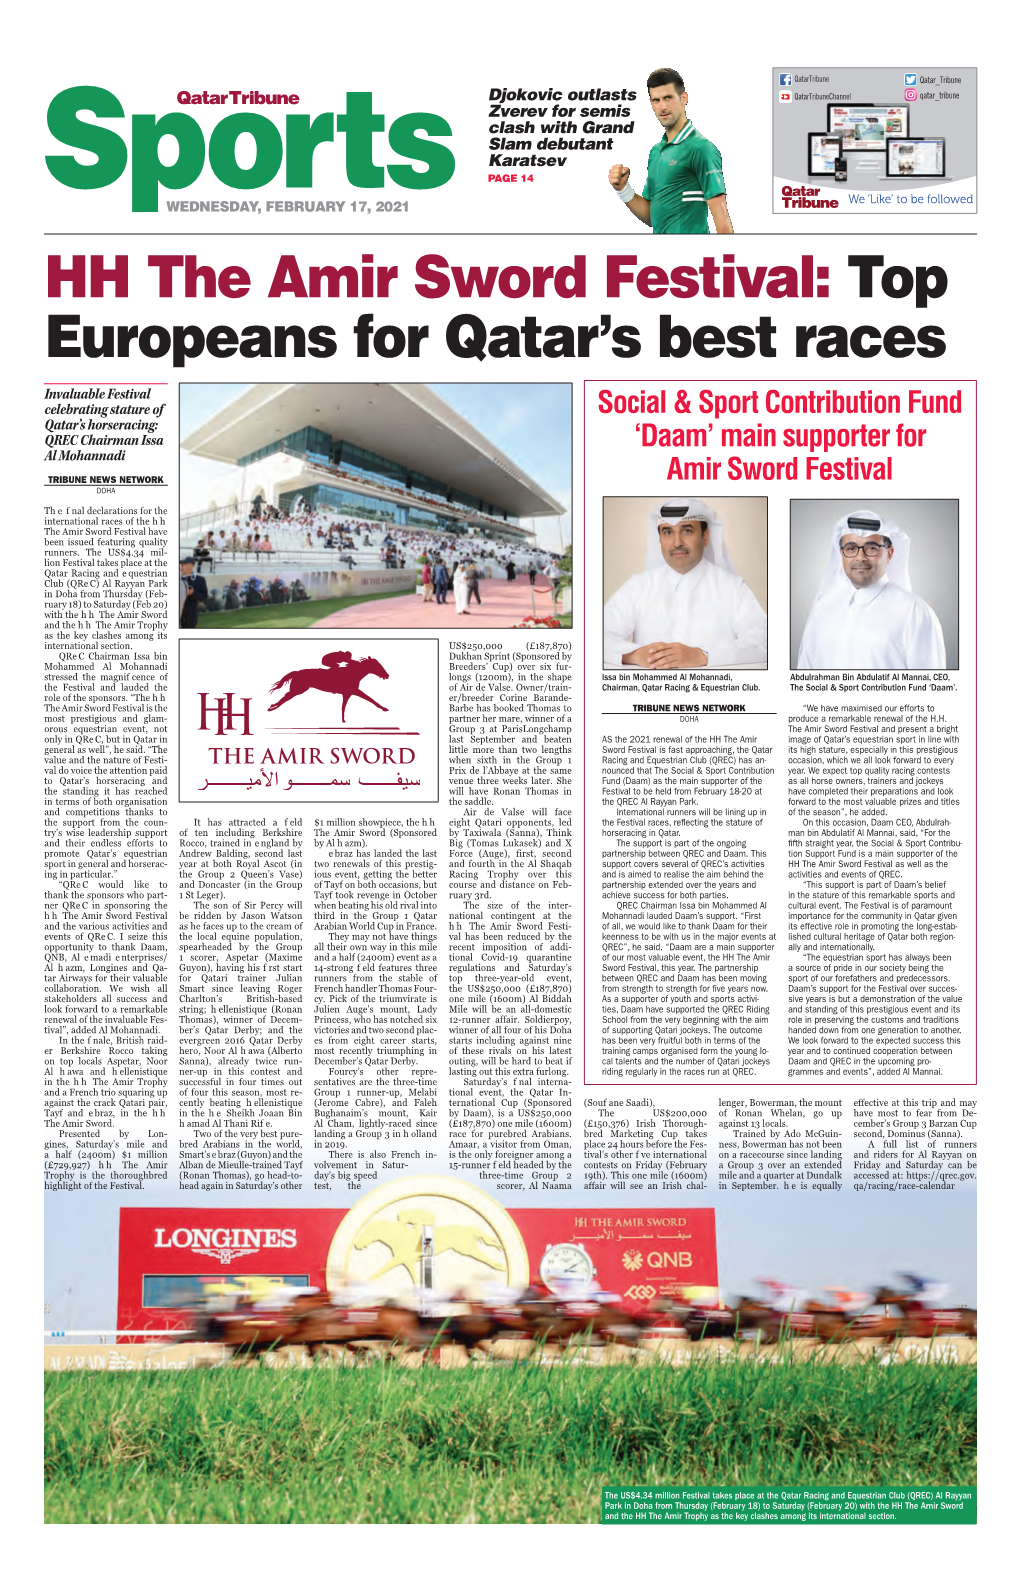 HH the Amir Sword Festival: Top Europeans for Qatar’S Best Races